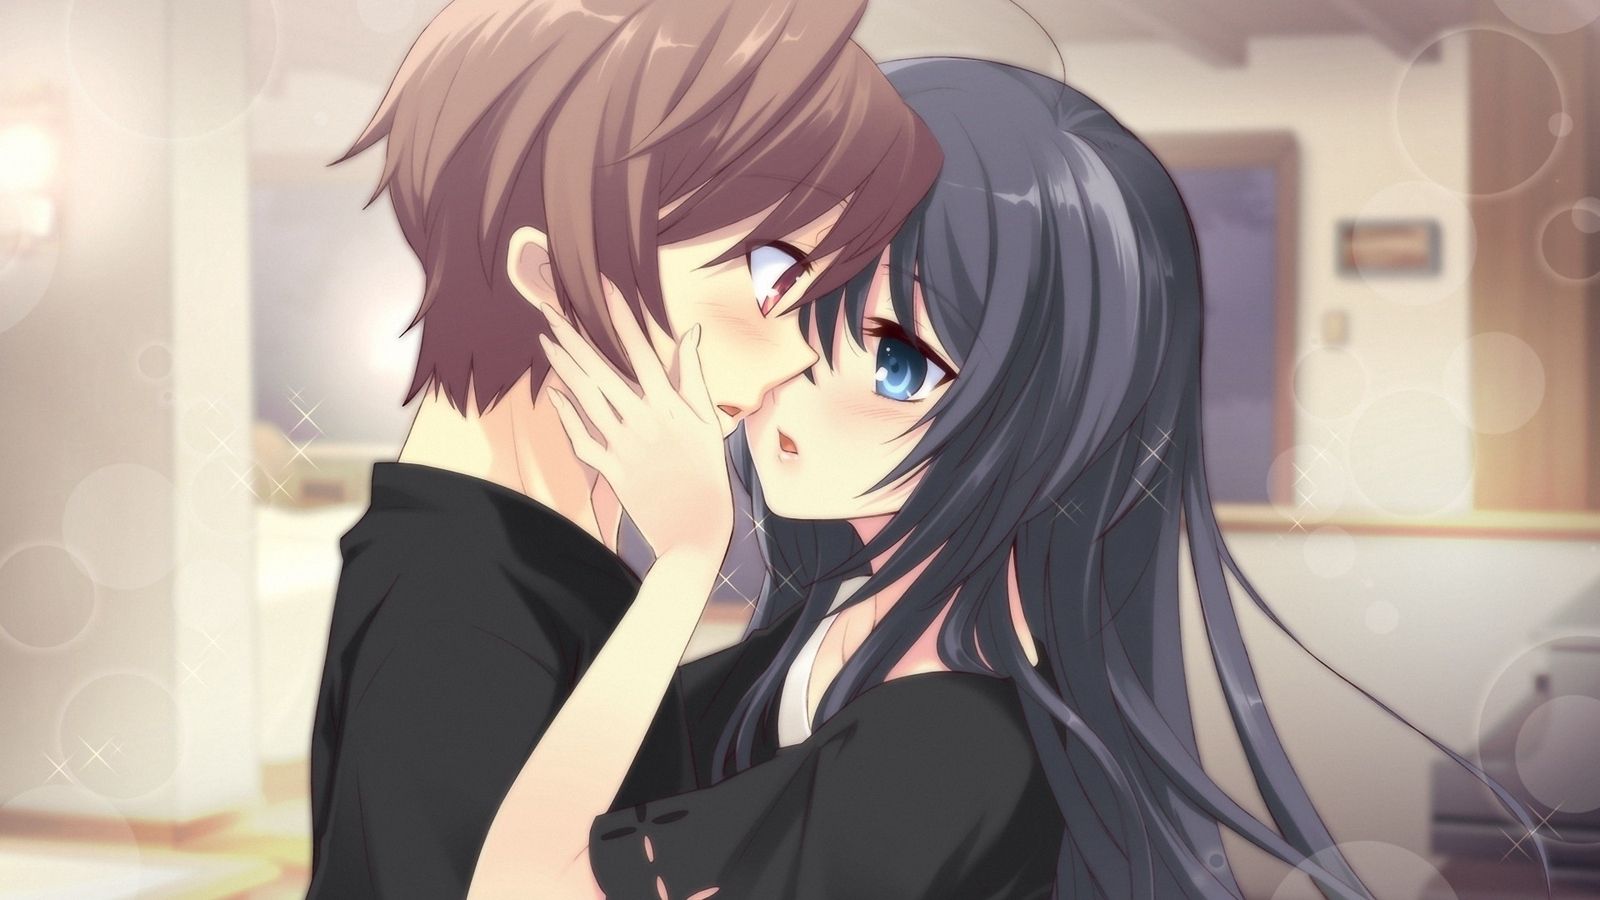 Download wallpaper 1600x900 anime, boy, girl, tenderness, kiss